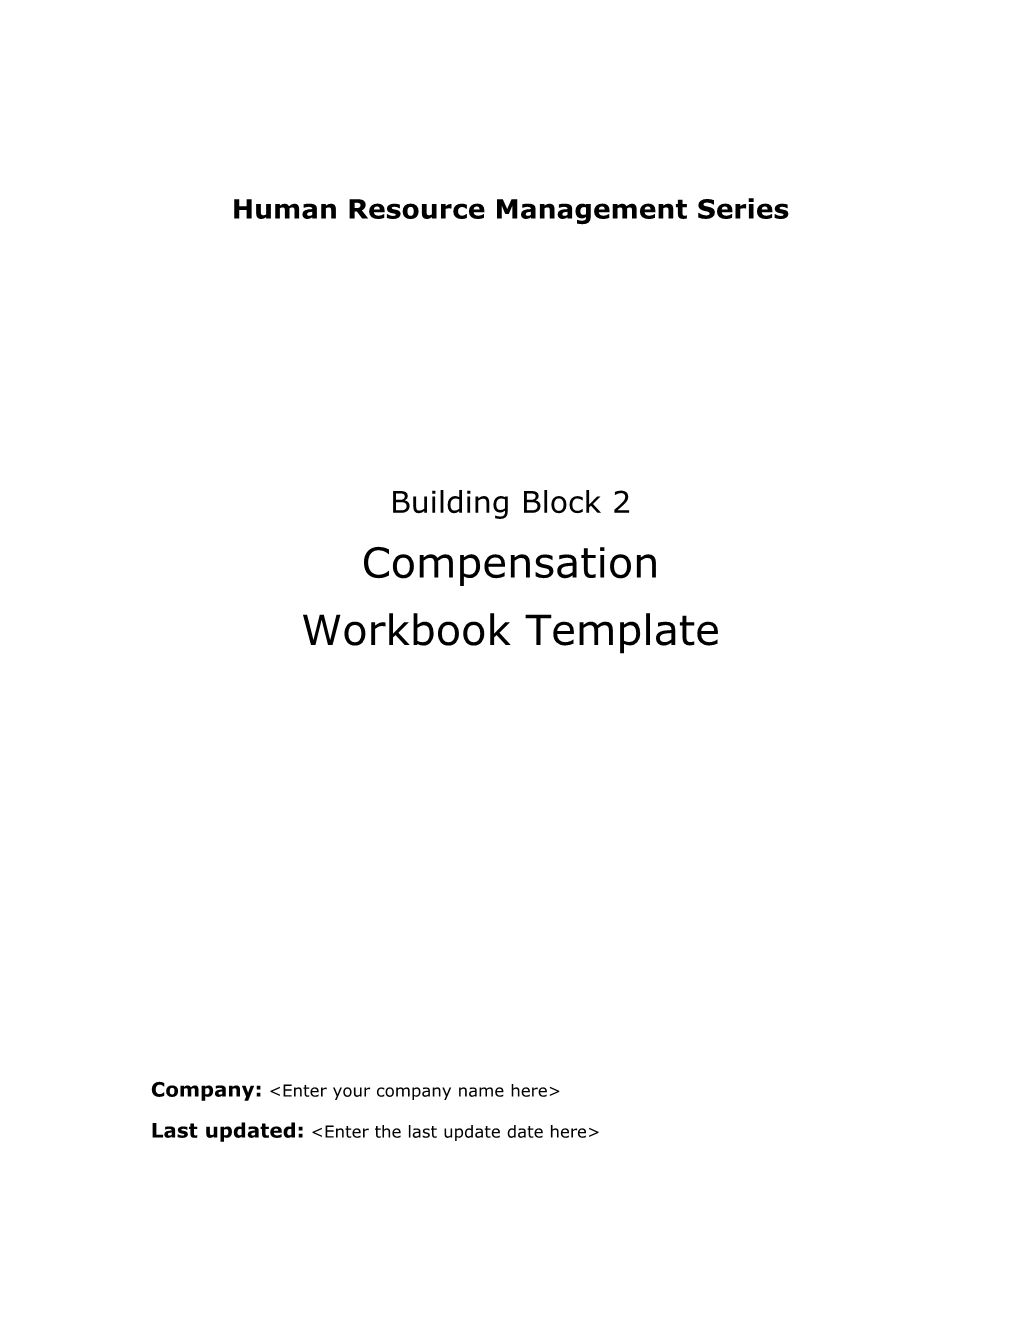 Human Resource Management Series